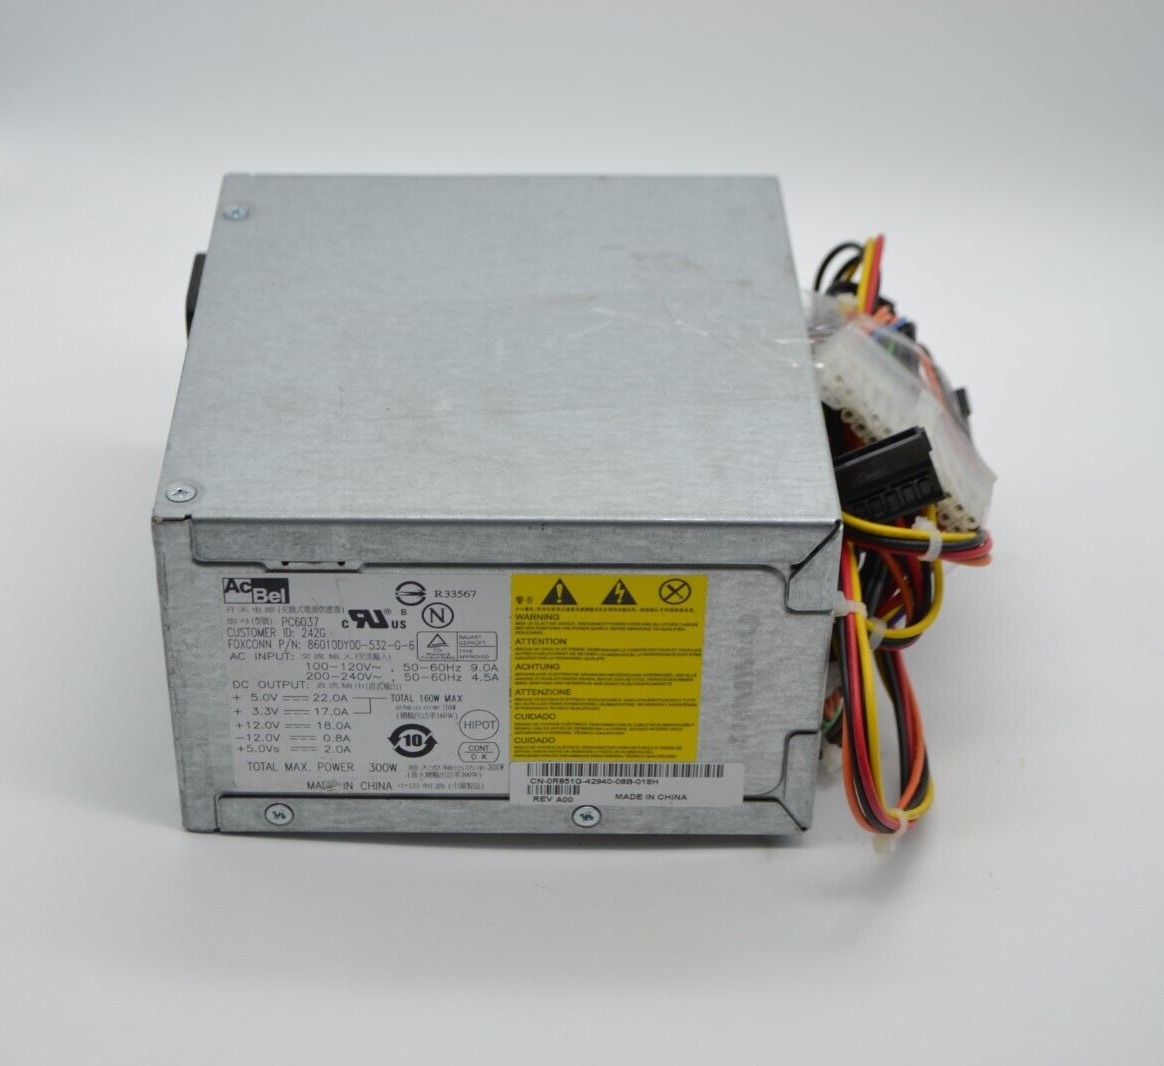 AcBel PC6037 300W 86010DY00-532-G-6 0R851G R851G Power Supply PSU Tested USA